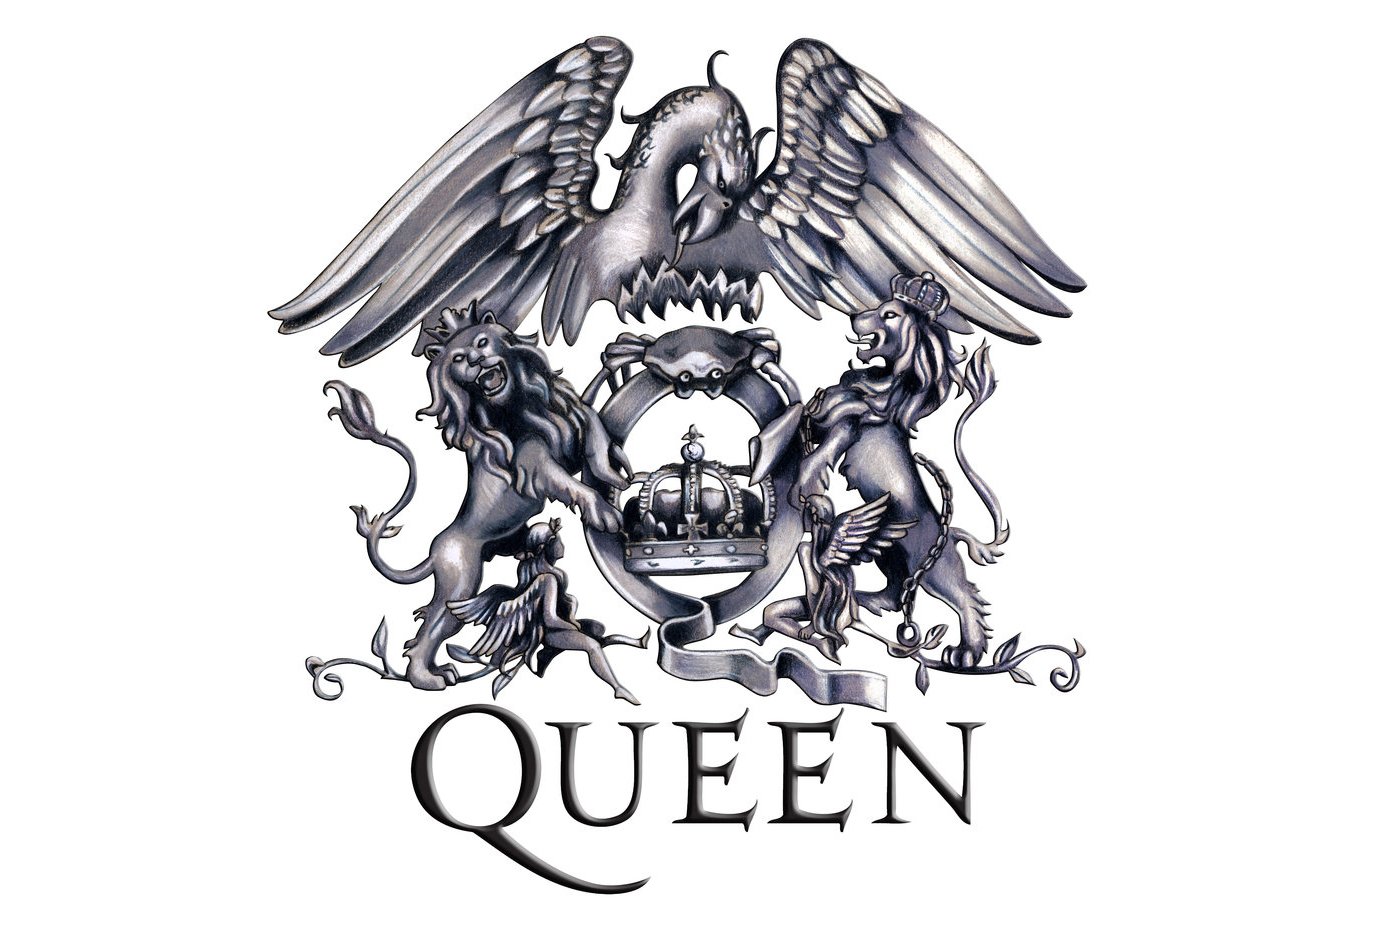 Queen logo histoire et signification, evolution, symbole Queen